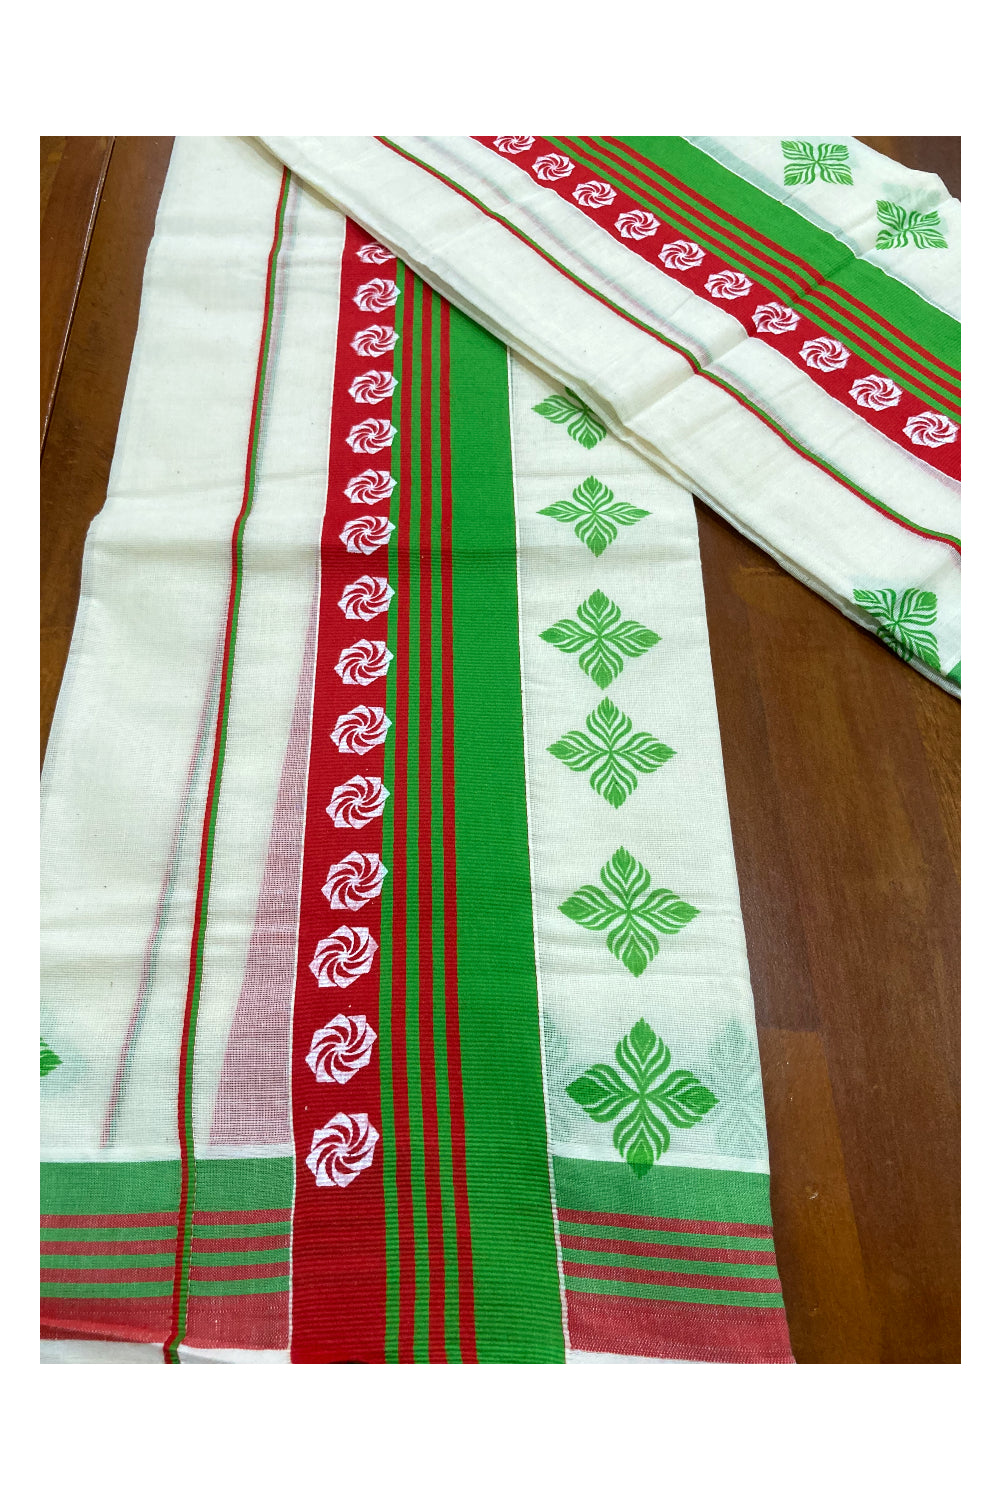 Cotton Set Mundu (Mundum Neriyathum) with Block Prints on Red and Green Border